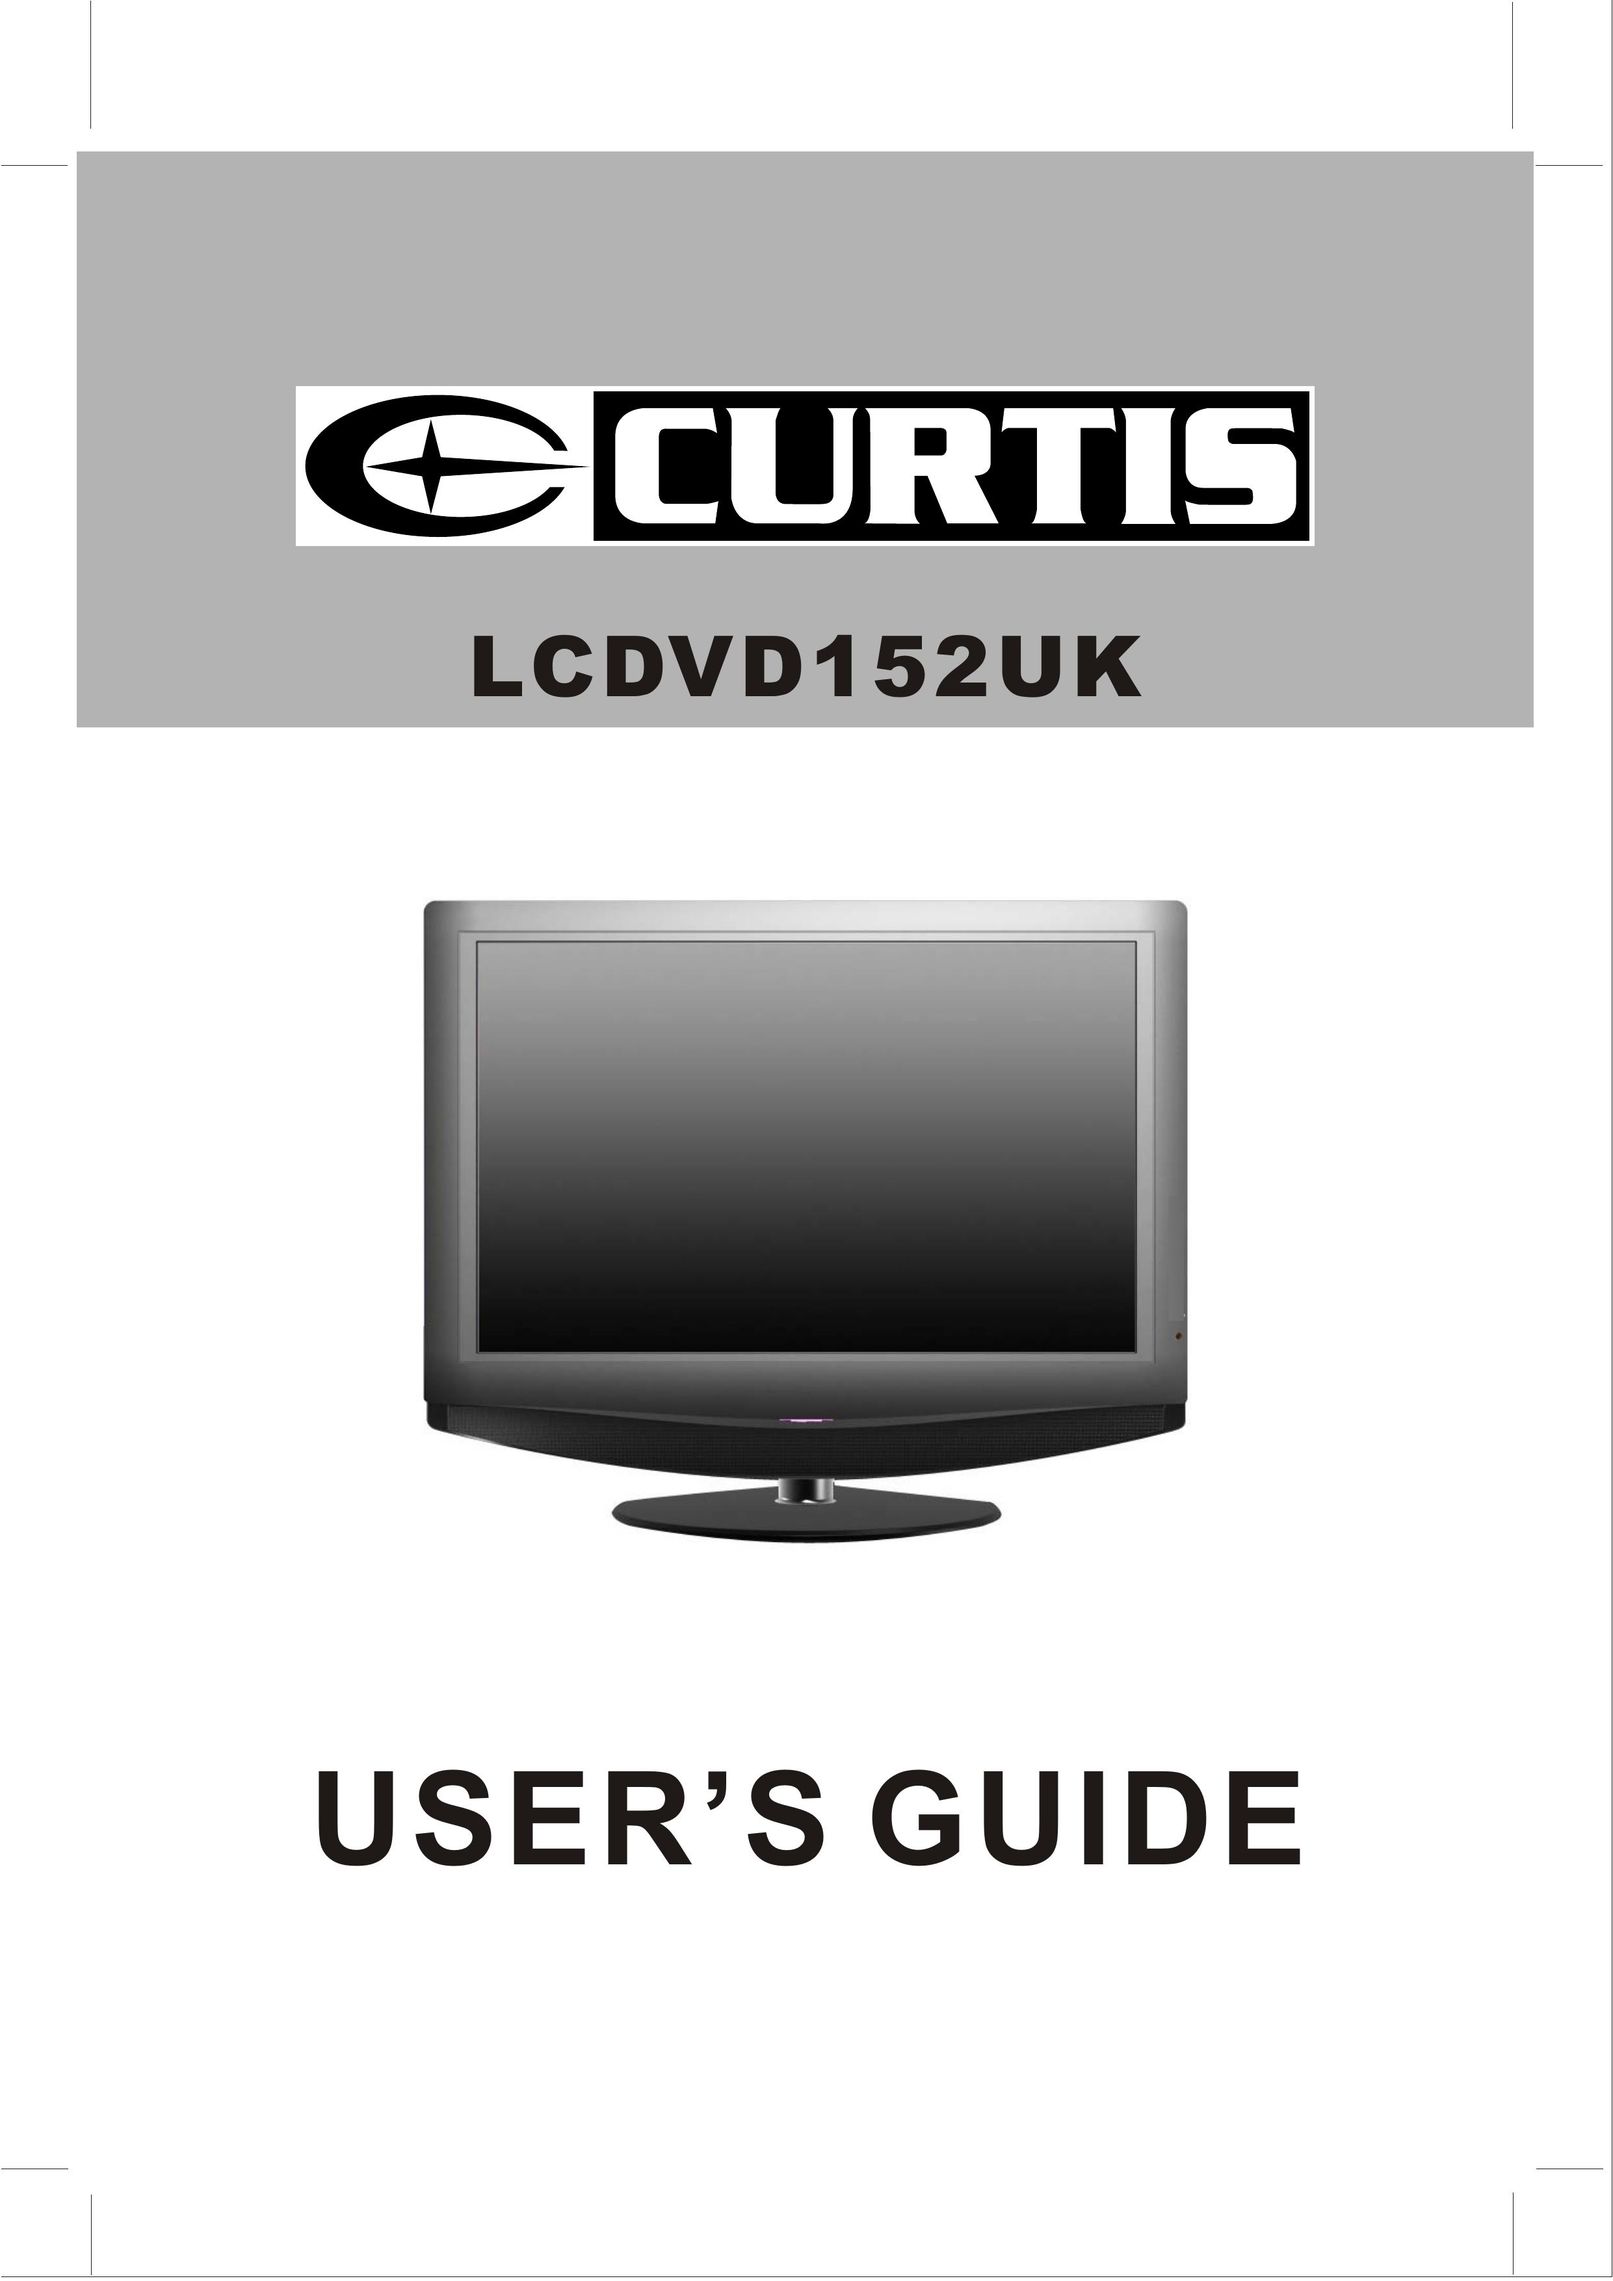 Curtis LCDVD152UK Flat Panel Television User Manual